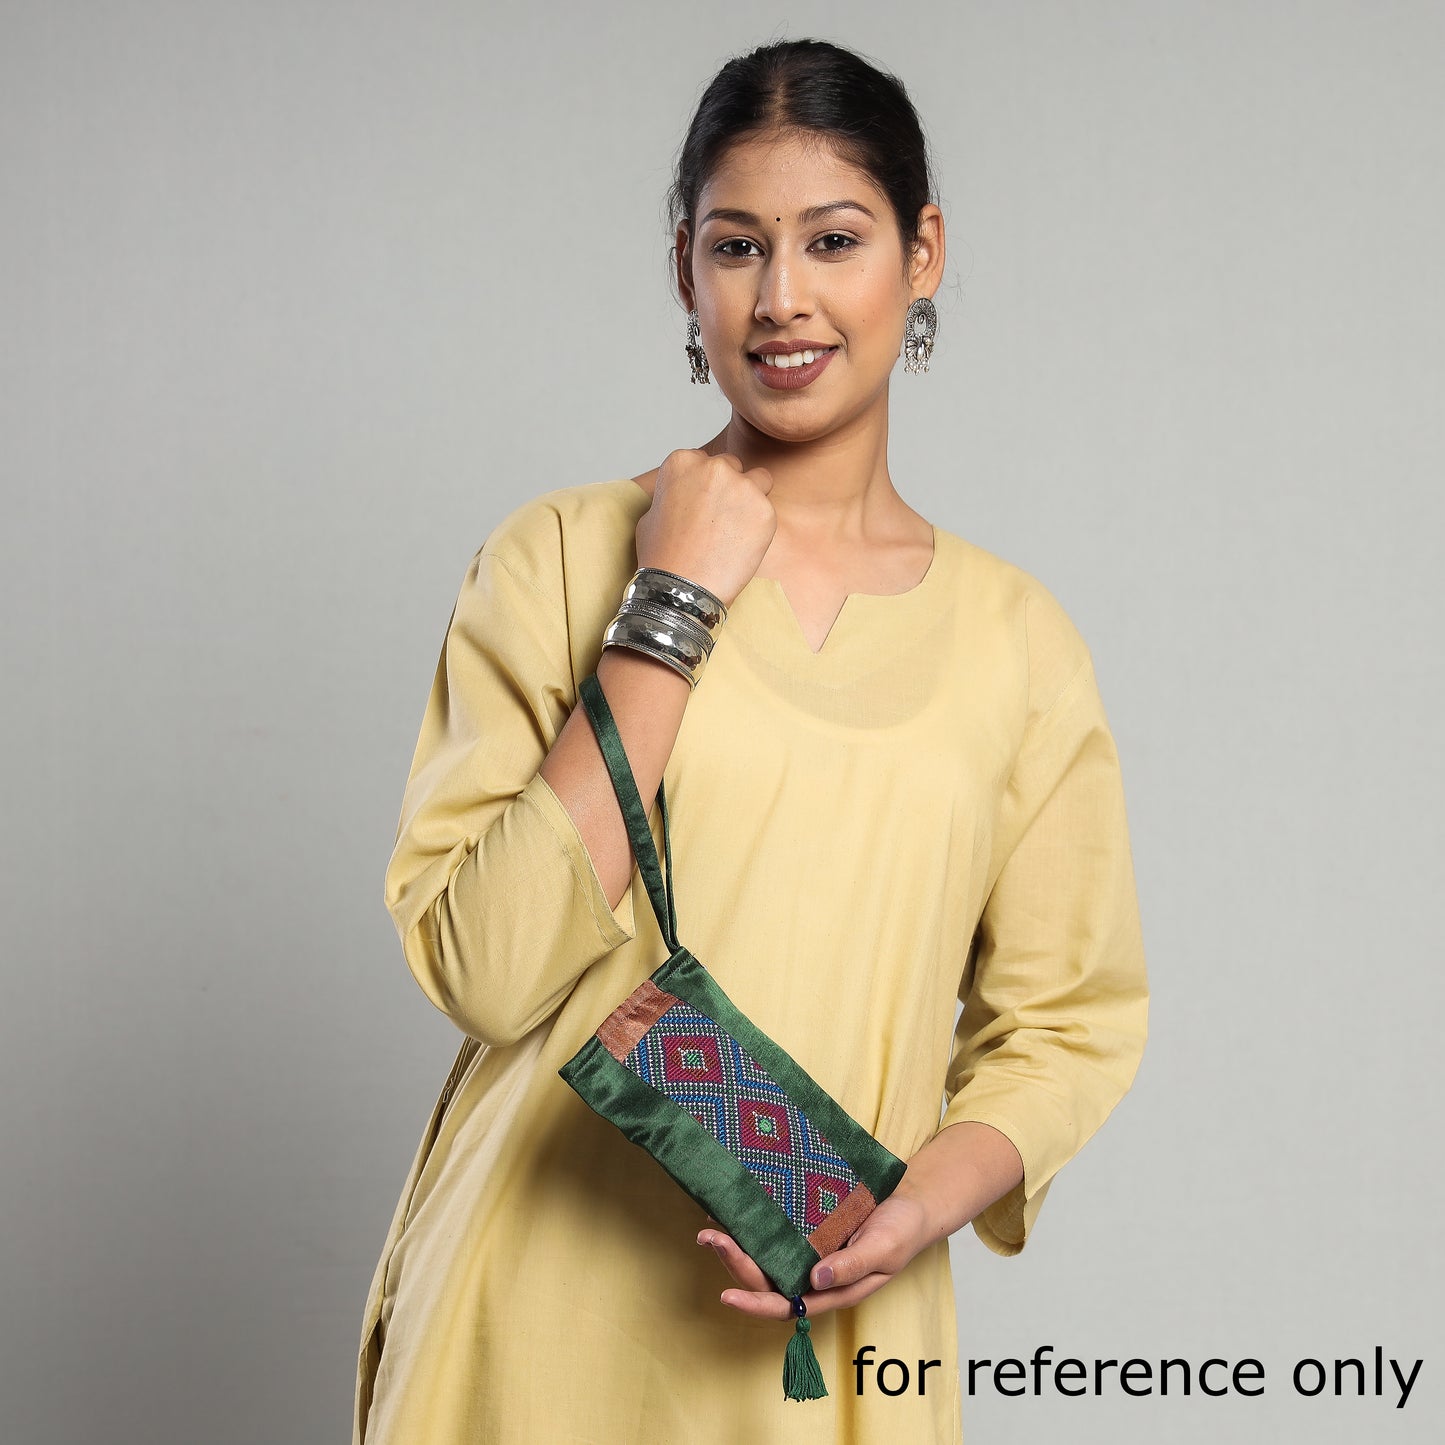 Kutch Jat Hand Embroidery Mashru Silk Mobile Pouch